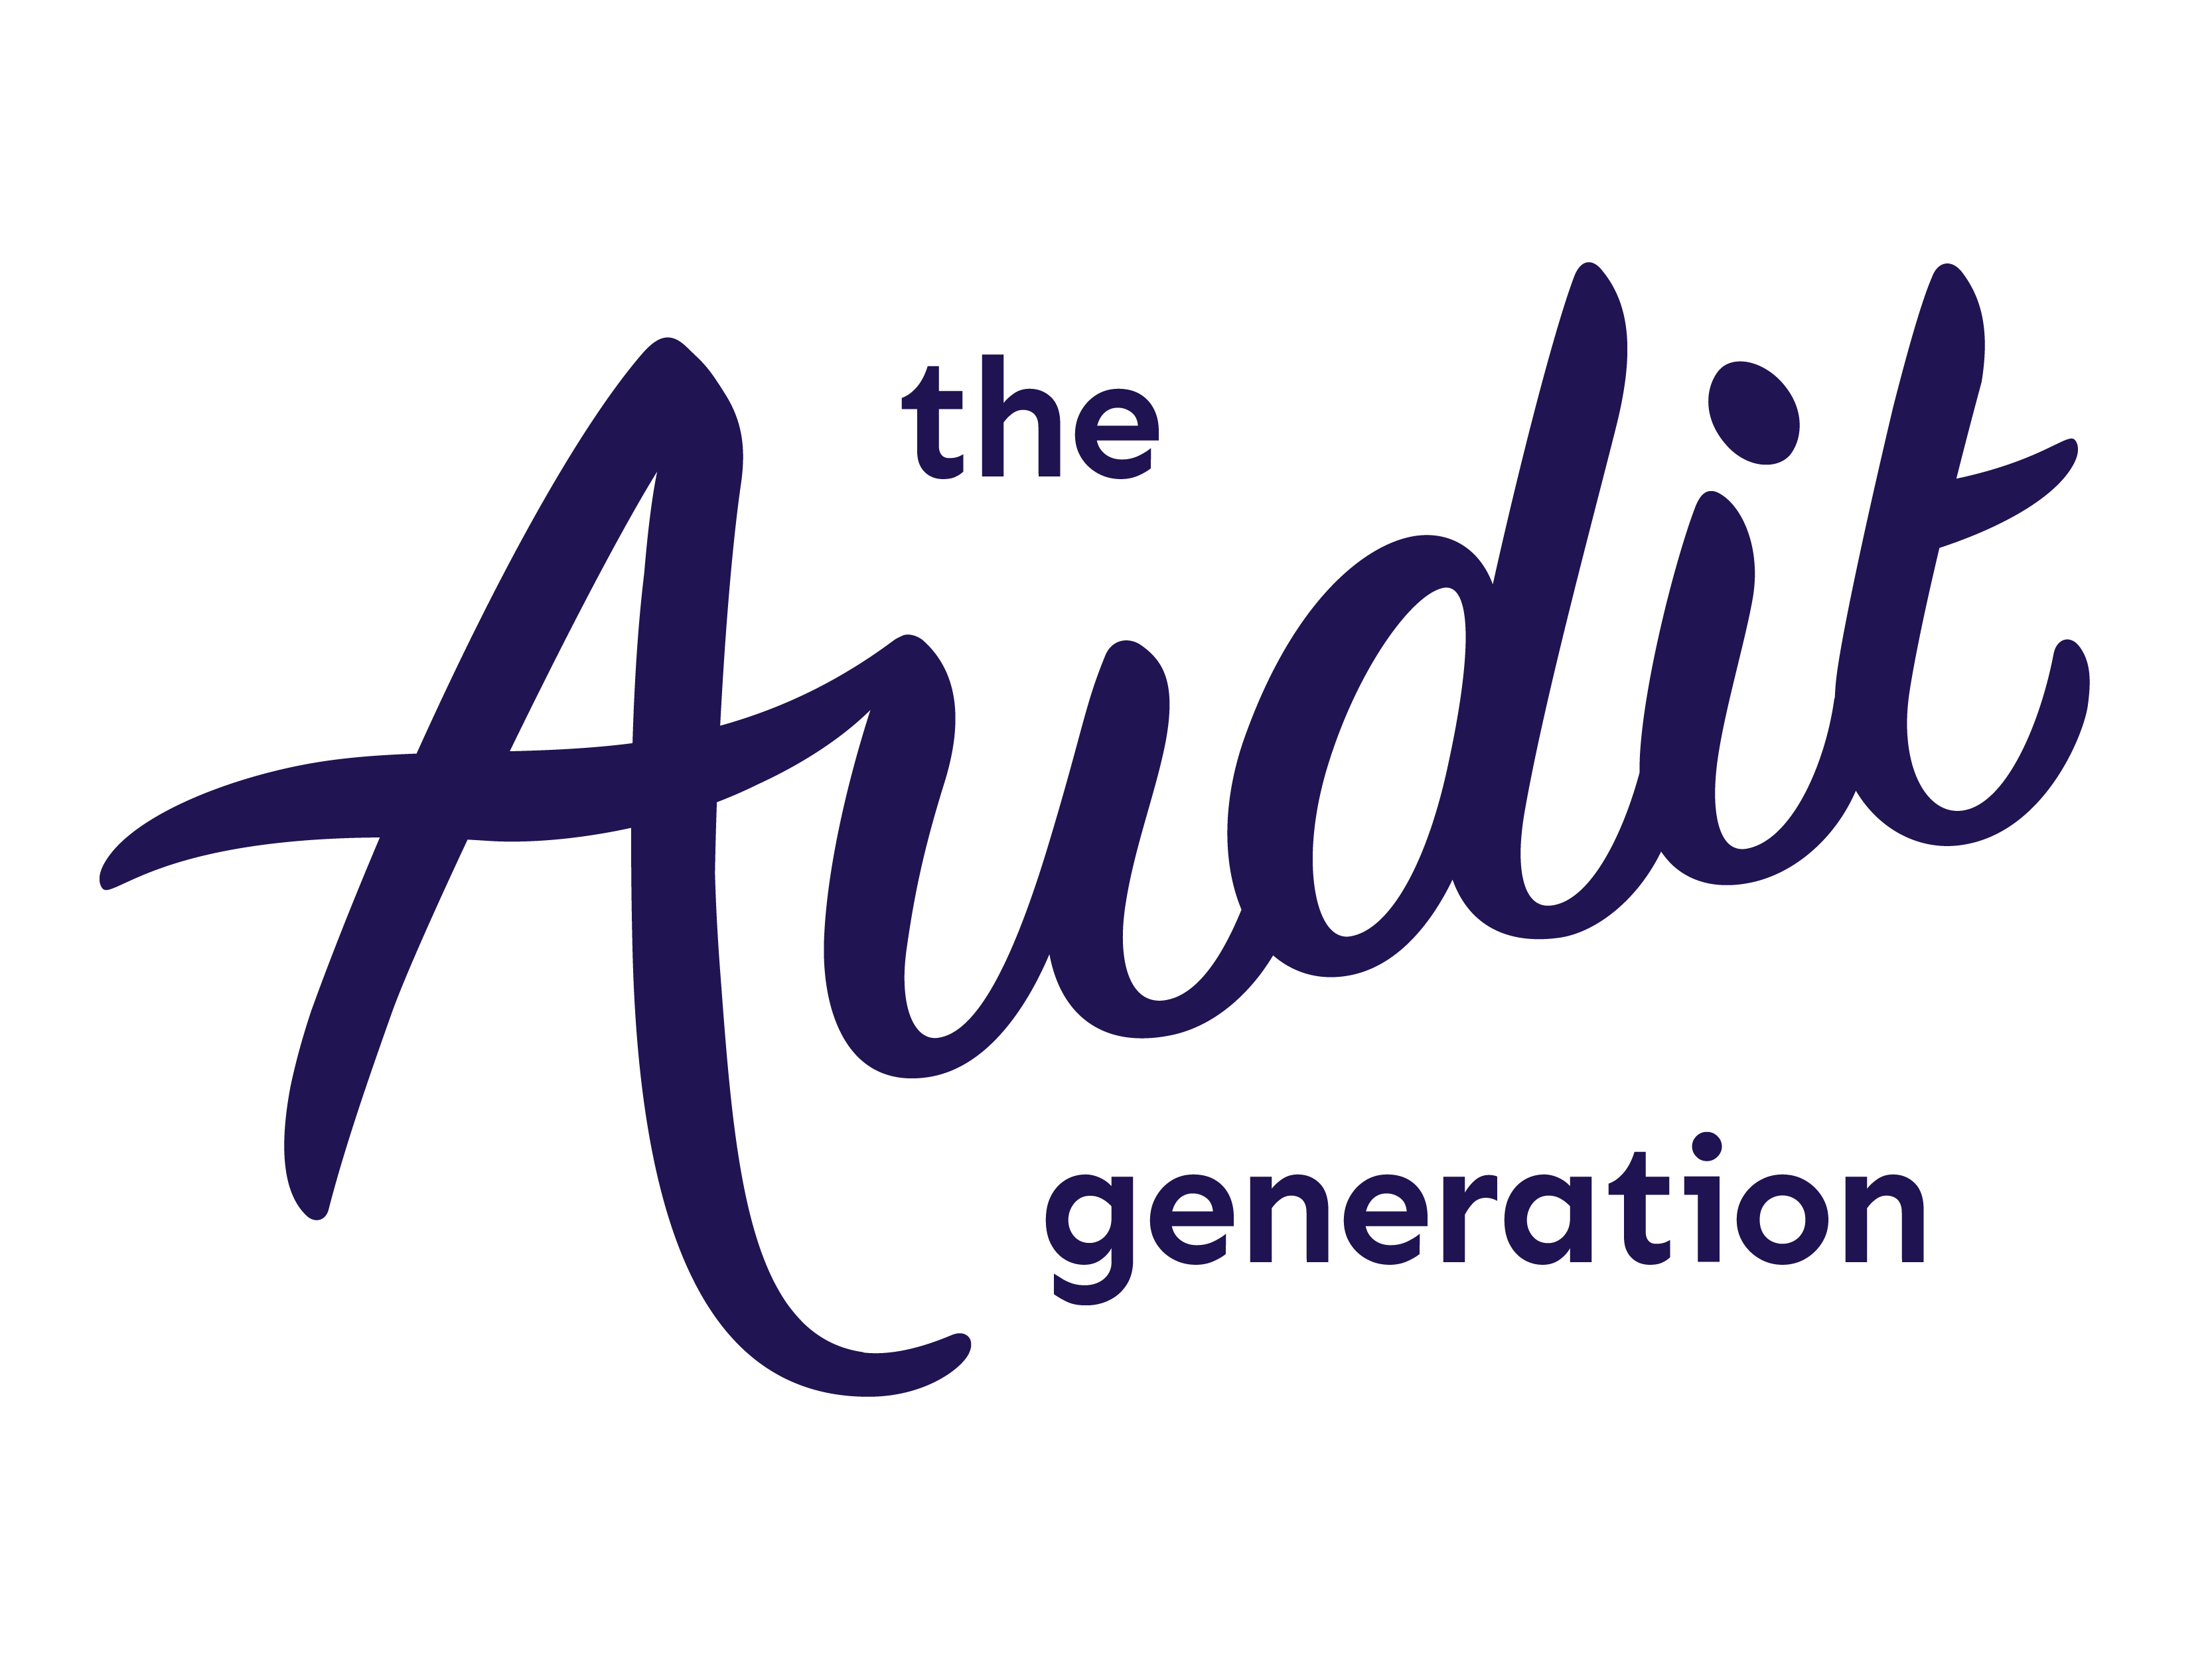 The Audit Generation